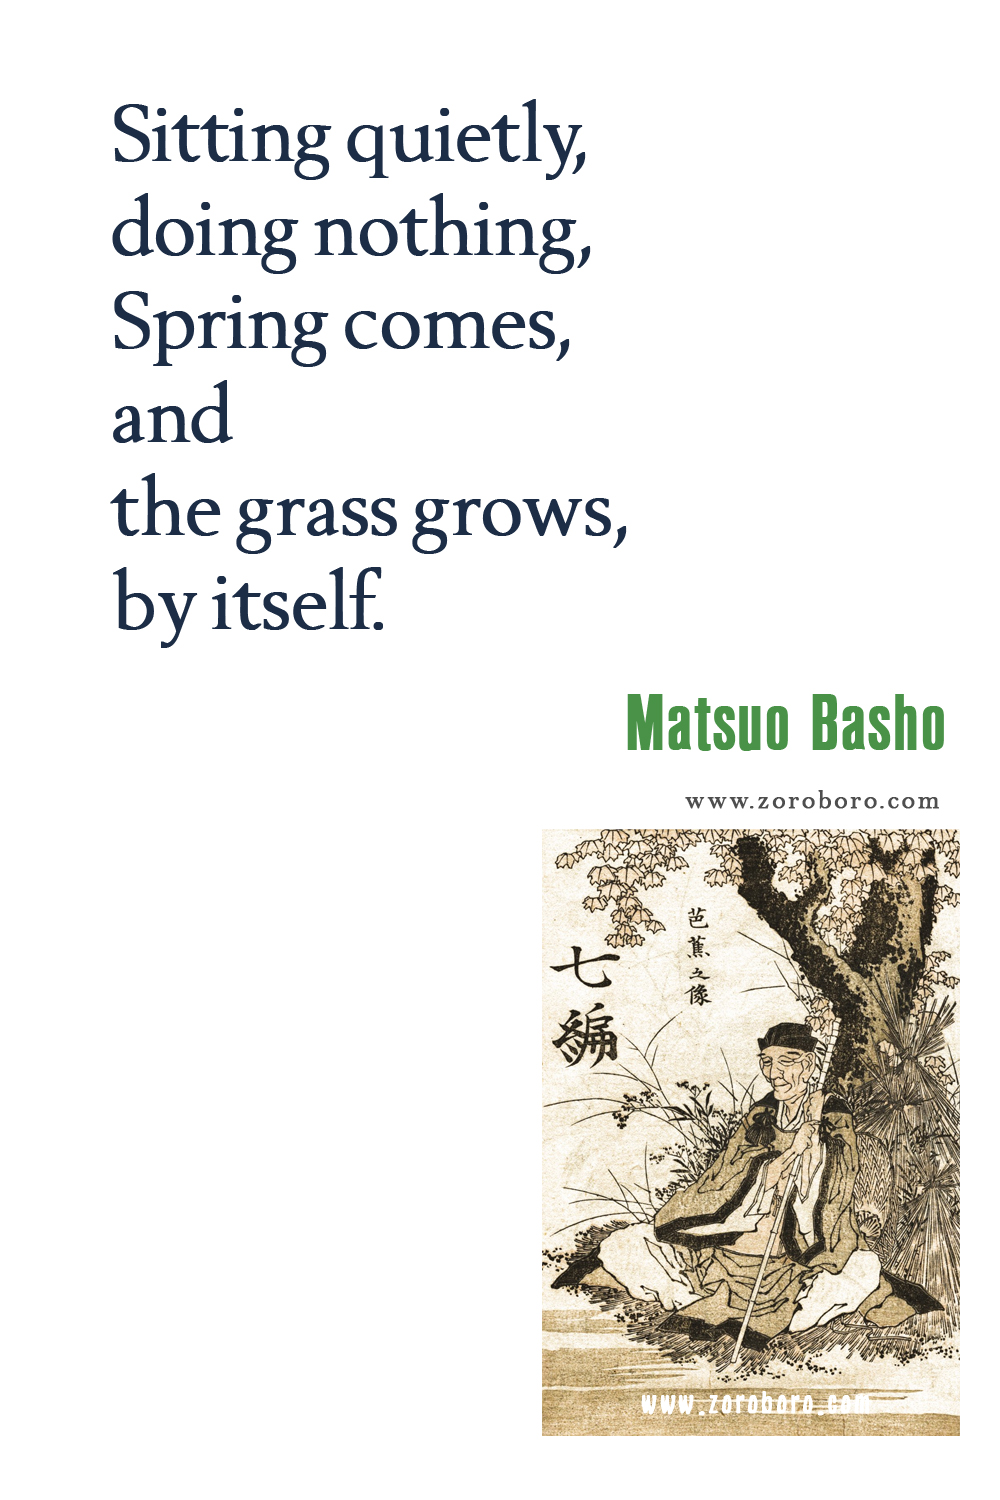 Matsuo Basho Quotes, Matsuo Basho Poems, Matsuo Basho Poet, Matsuo Basho Haiku Poetry, Matsuo Basho Quotes.